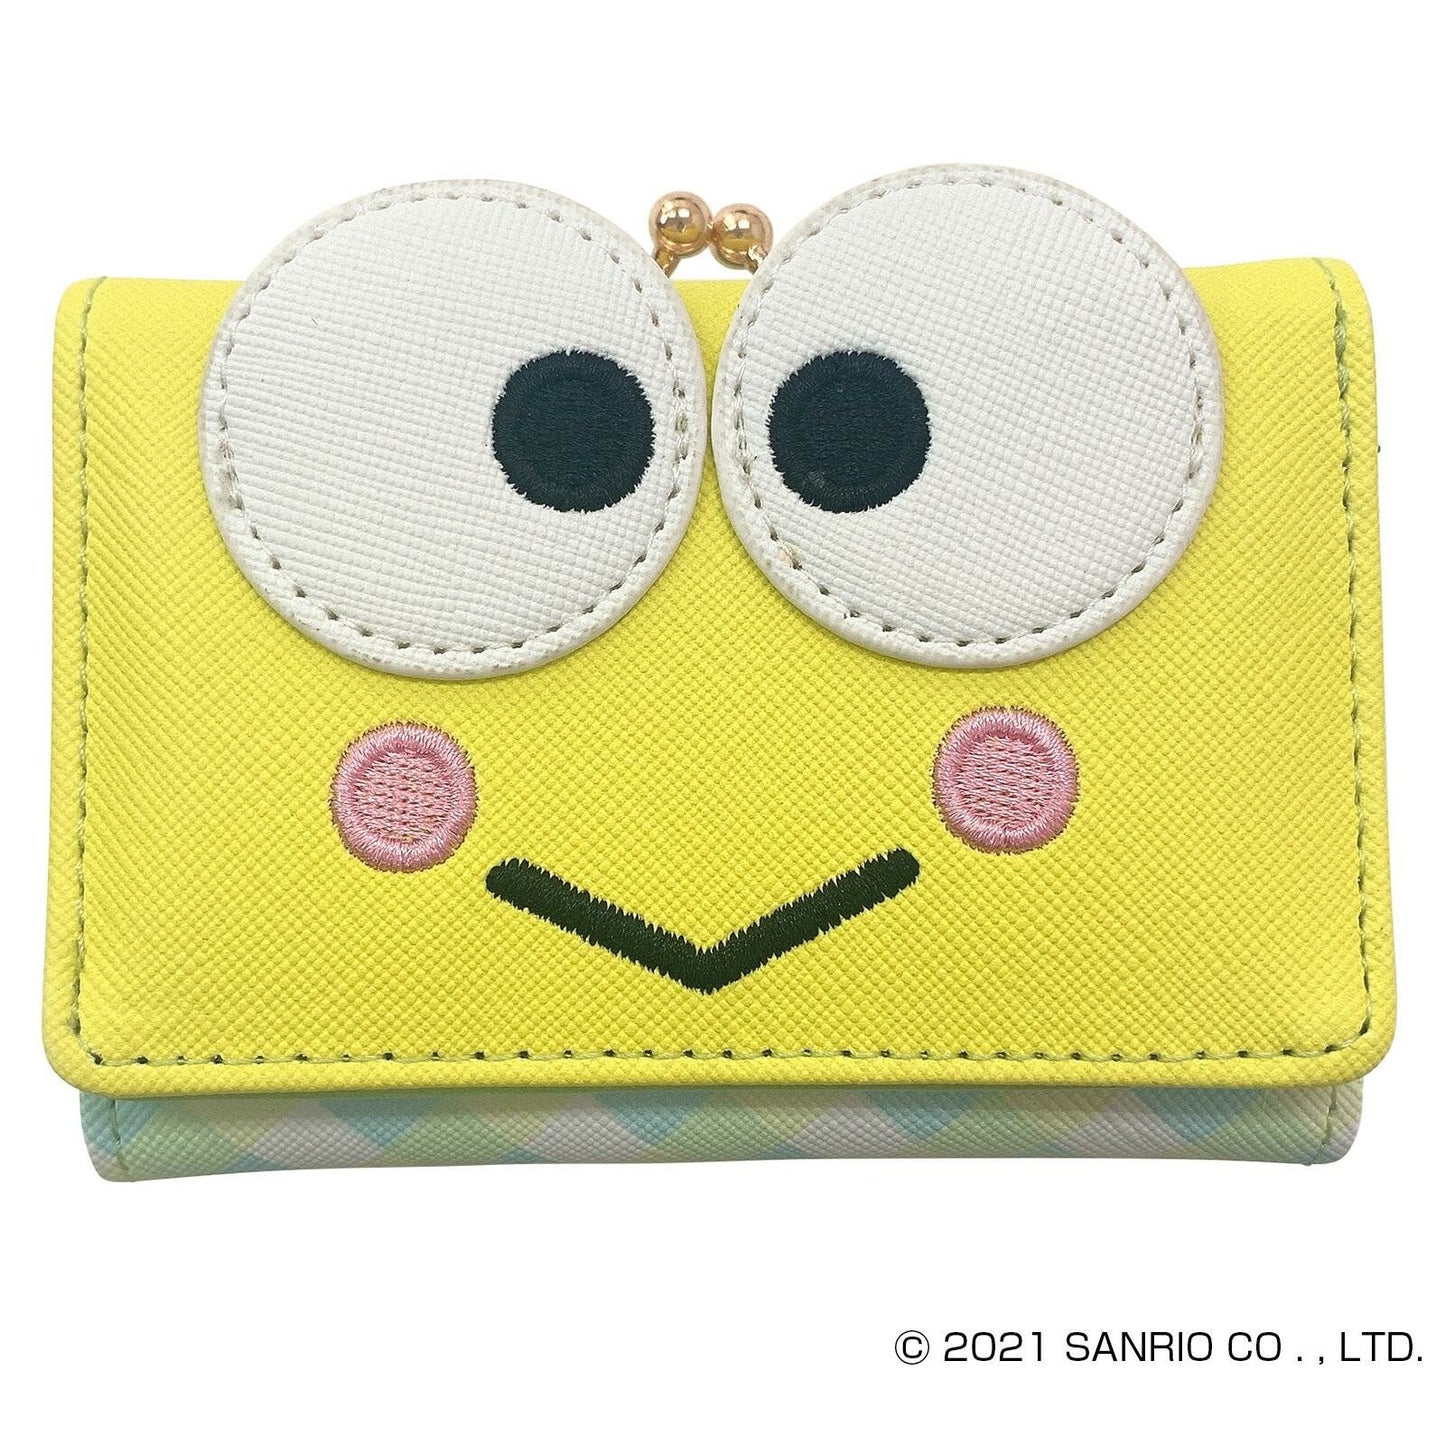  Sanrio Characters 3-fold wallet 